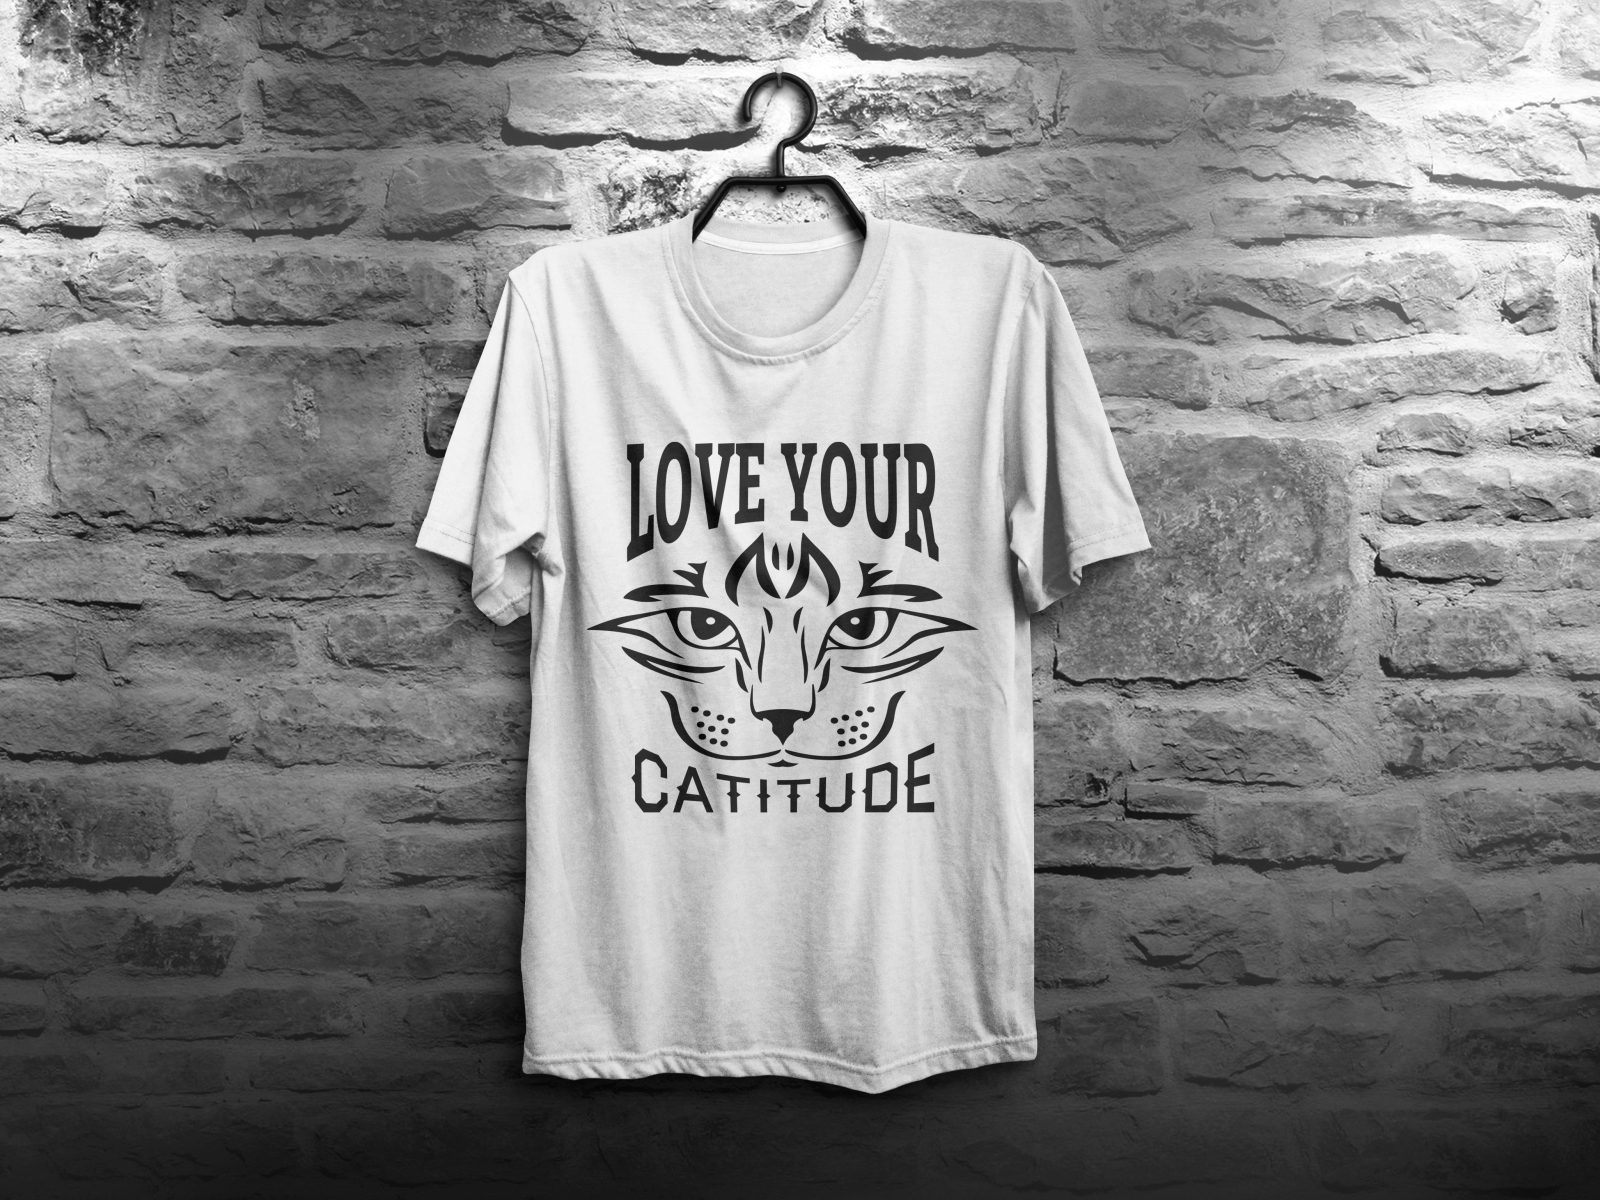 Cat lover T-Shirt by Ashik Khan on Dribbble